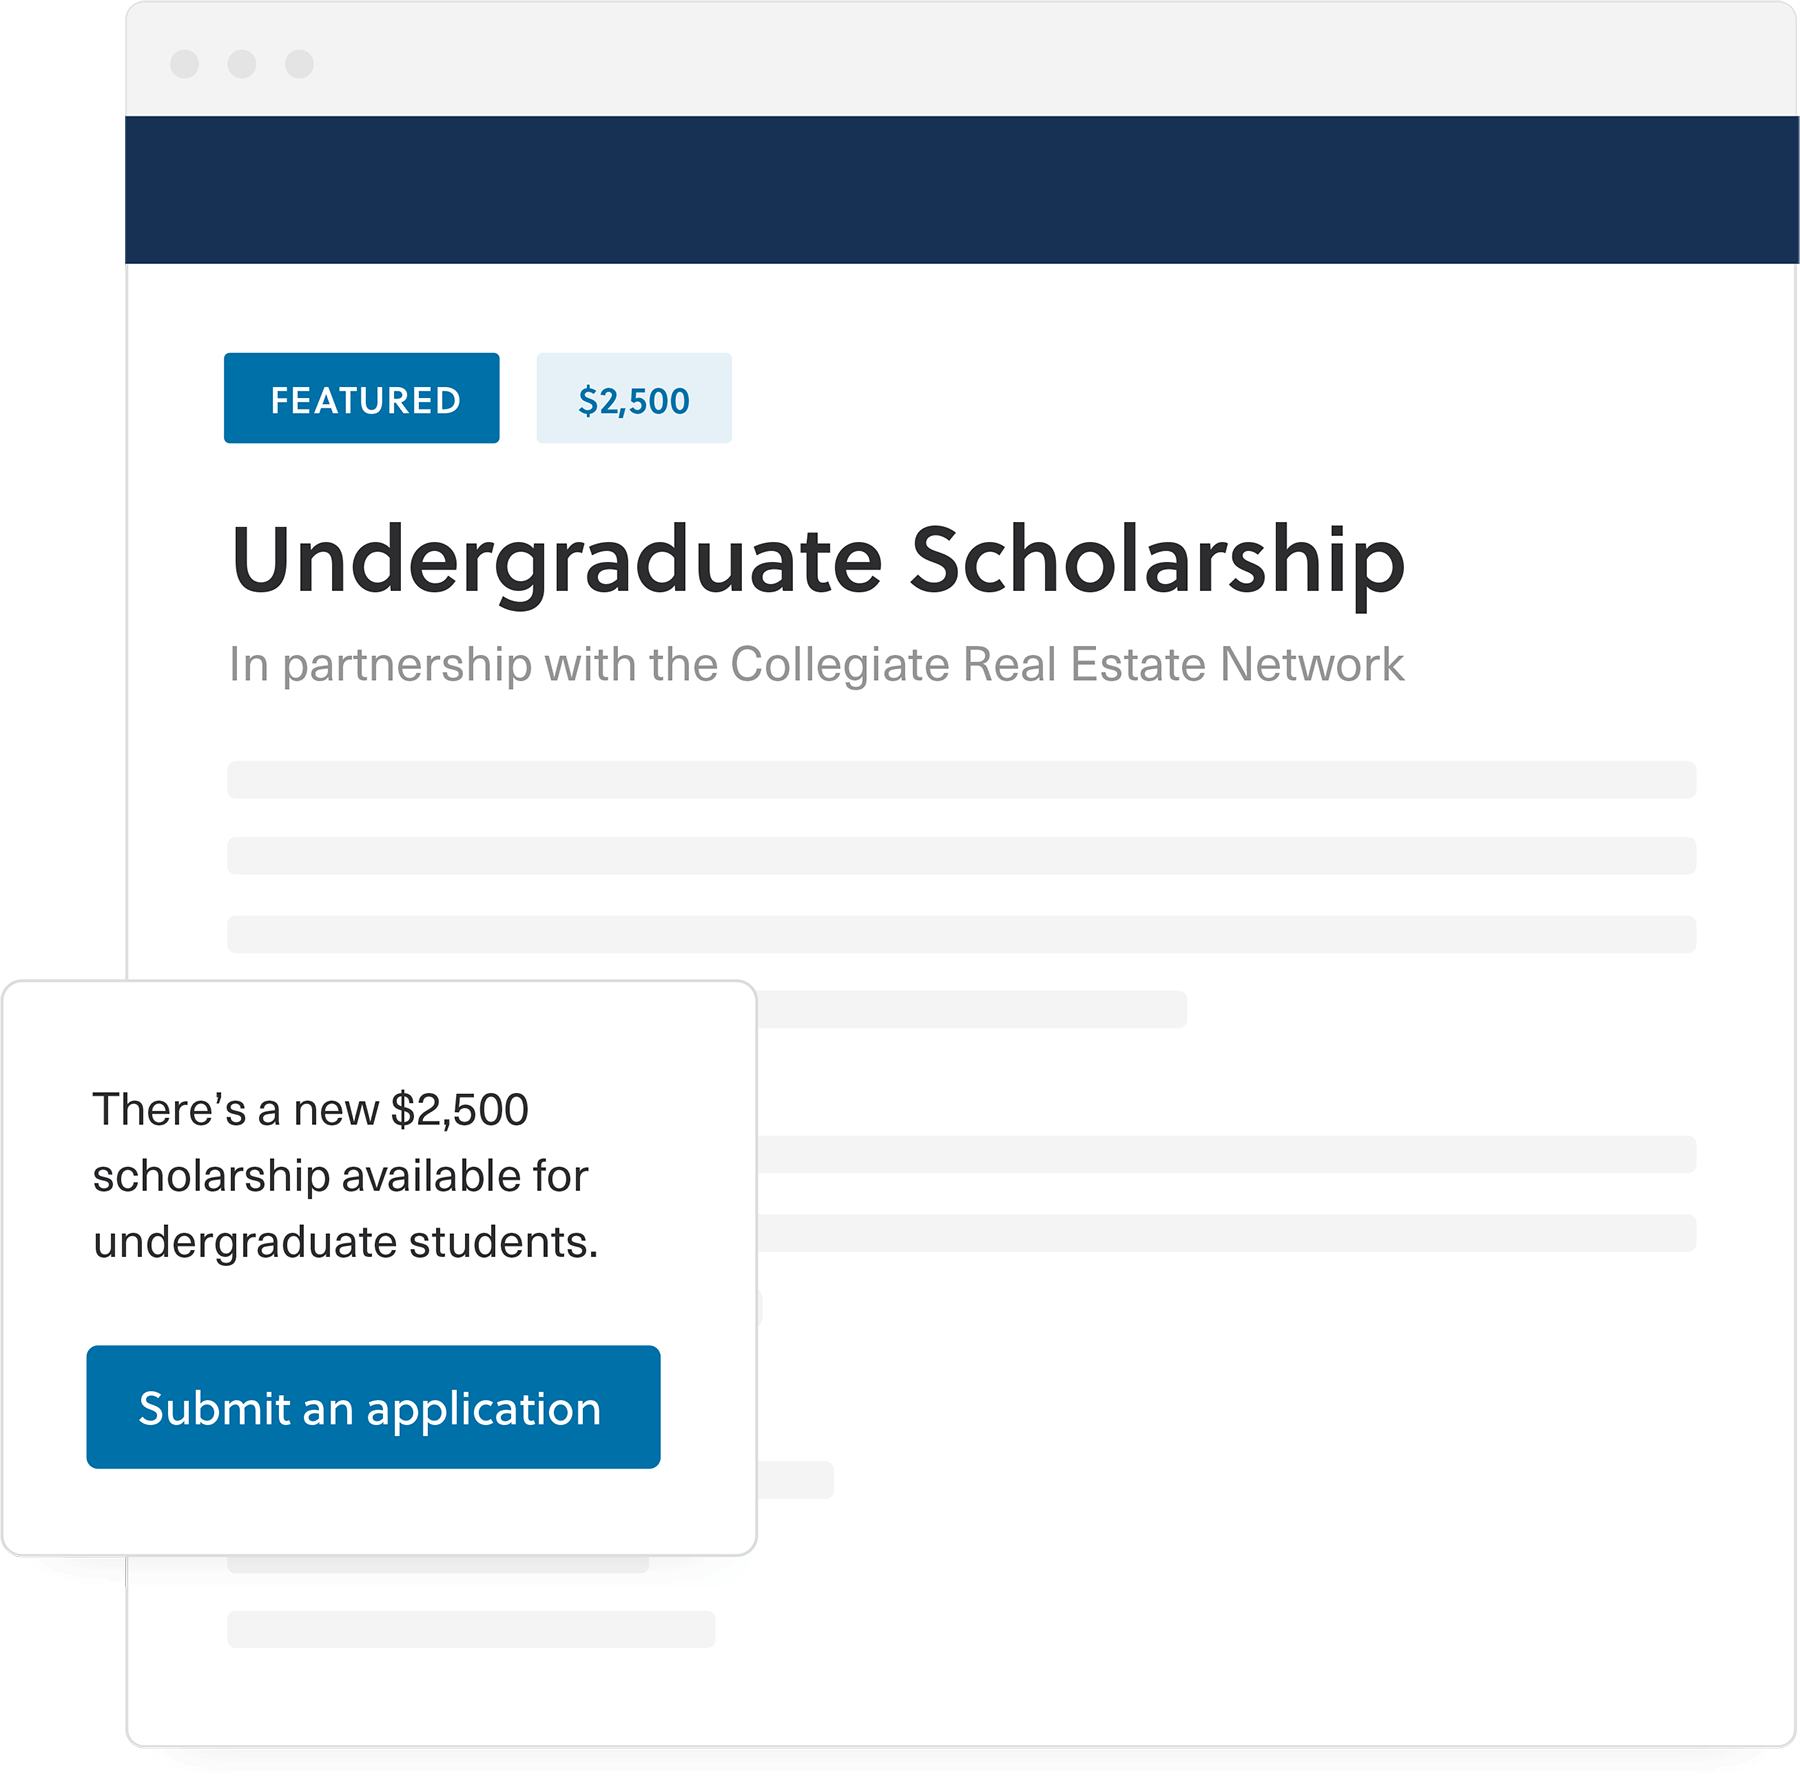 Image of an undergraduate scholarship posting